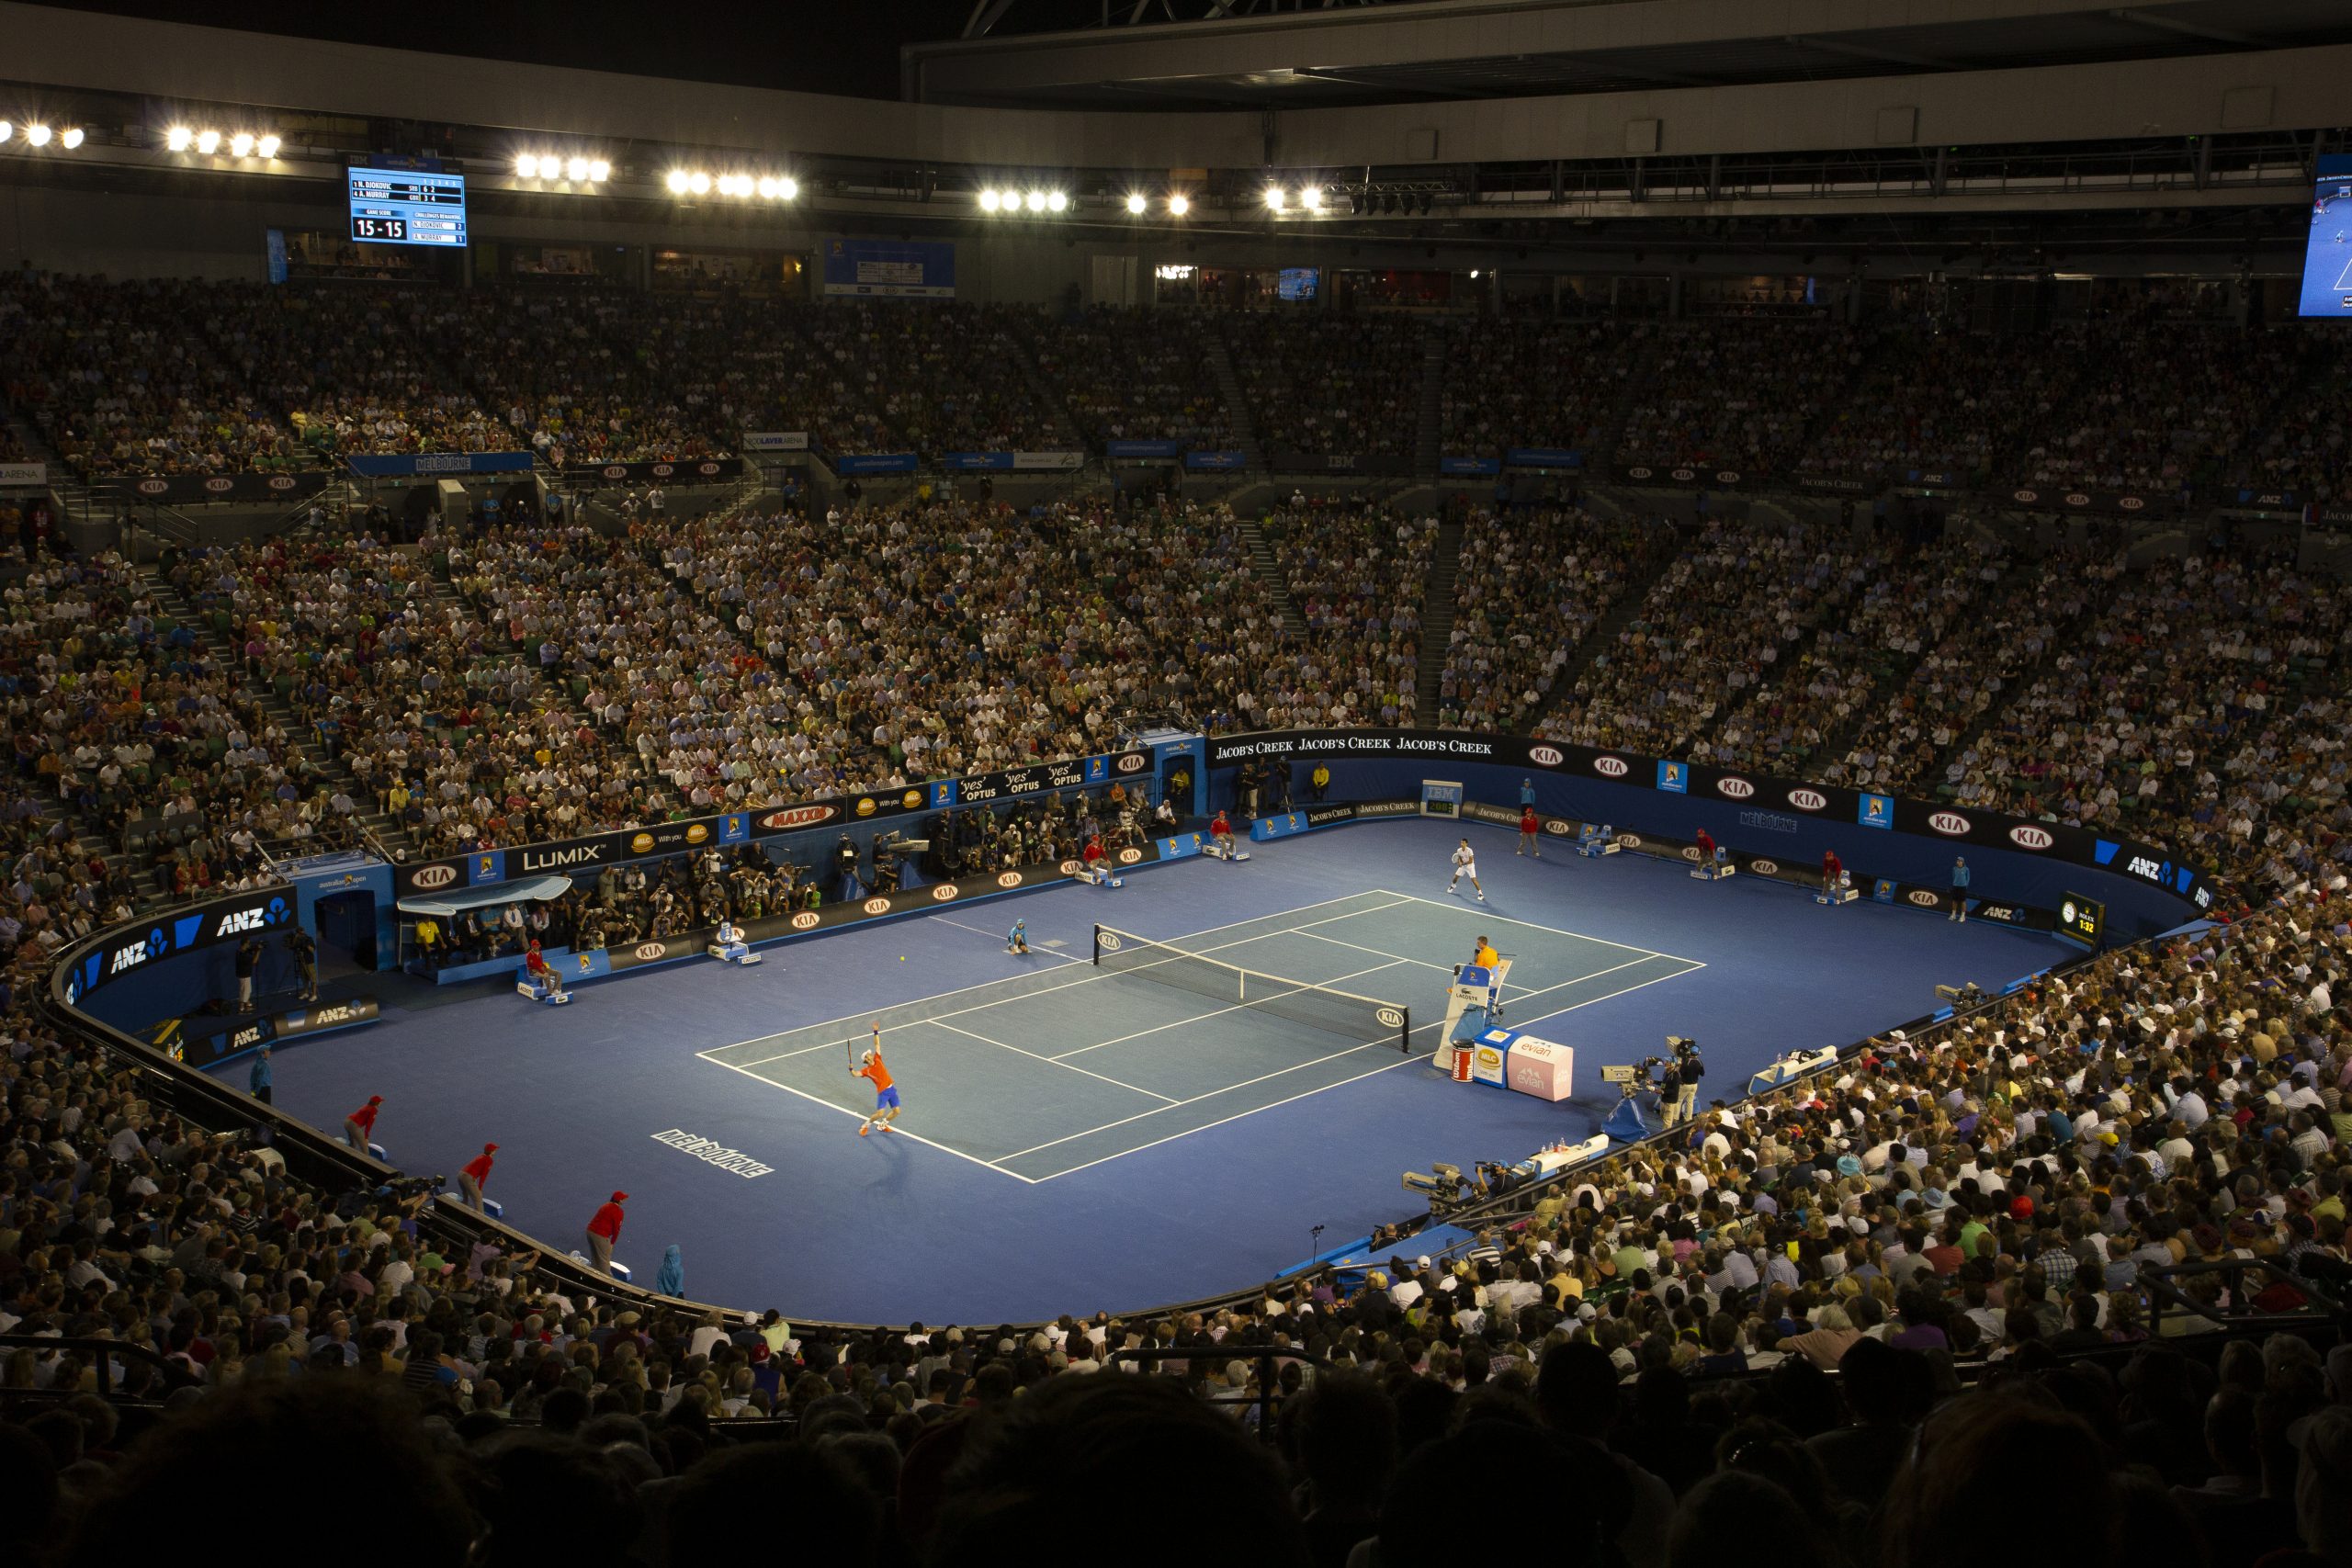 Australian open semi final, Andy murray serving against Novak Djokovic